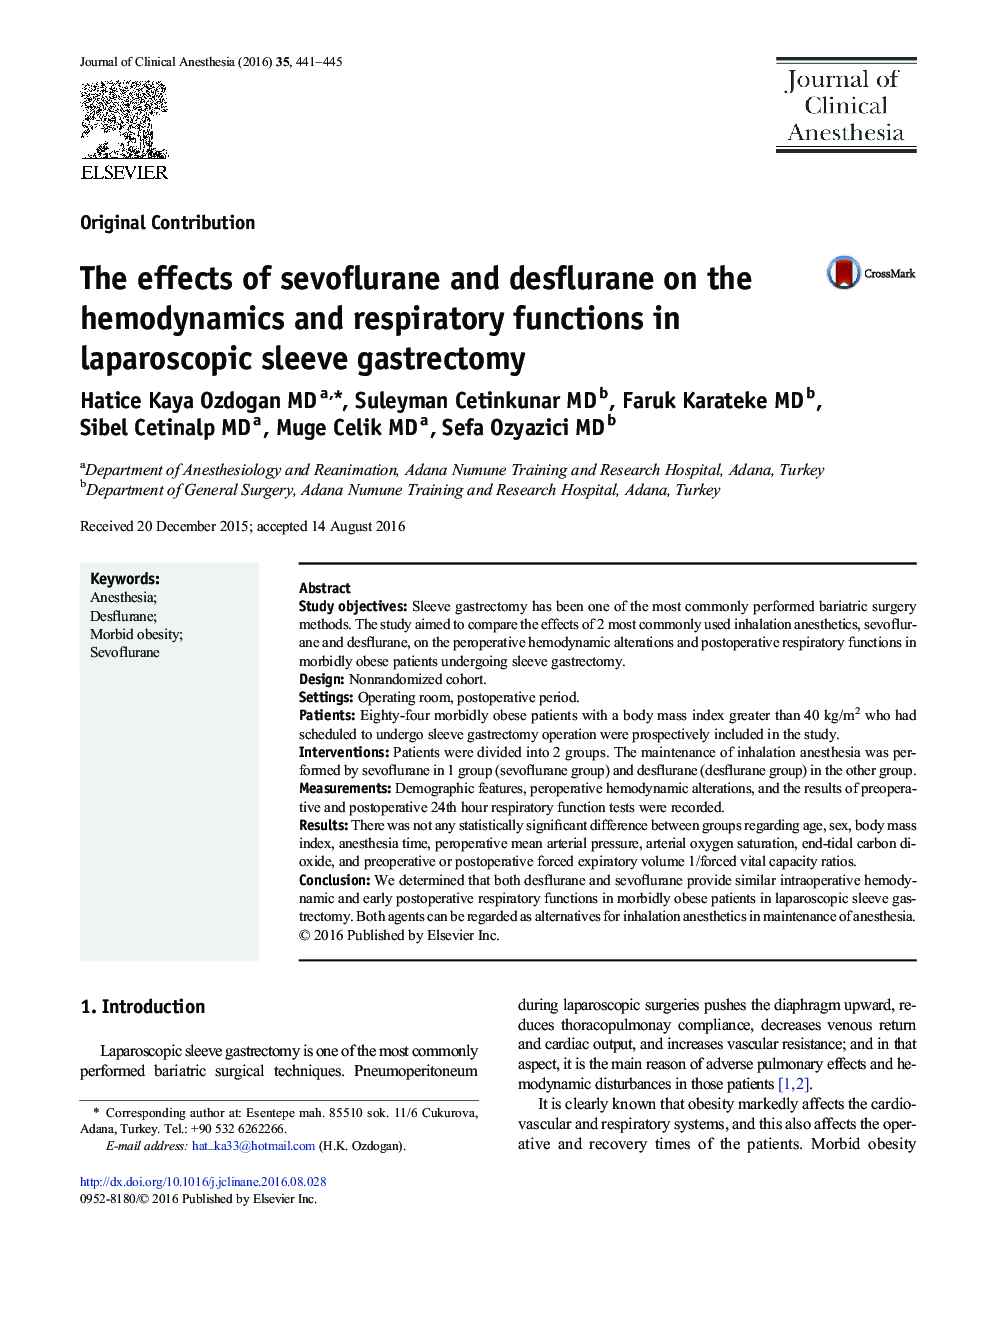 Original ContributionThe effects of sevoflurane and desflurane on the hemodynamics and respiratory functions in laparoscopic sleeve gastrectomy